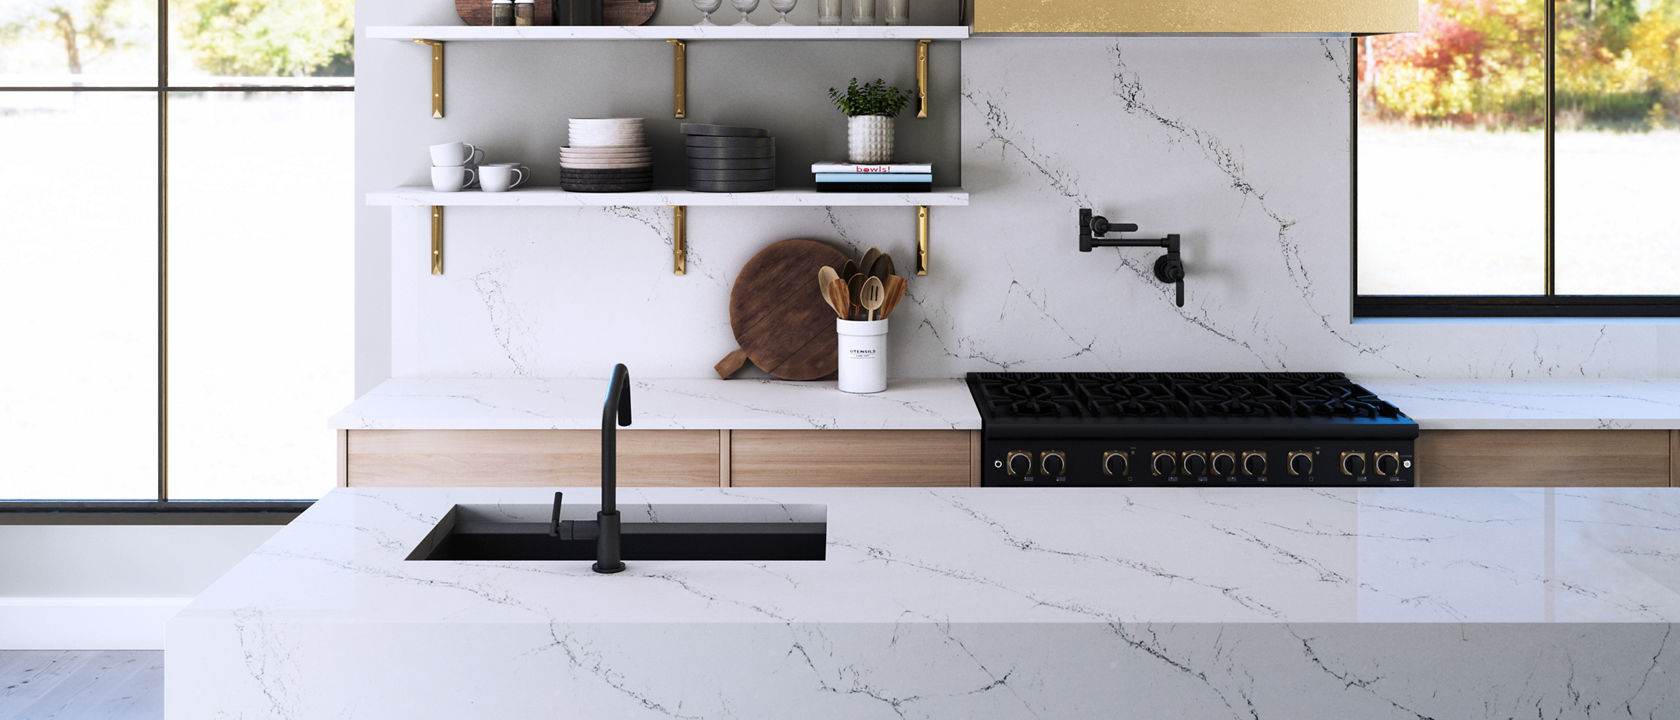 A sleek modern kitchen with Cambria Hawksmoore quartz countertops and backsplash